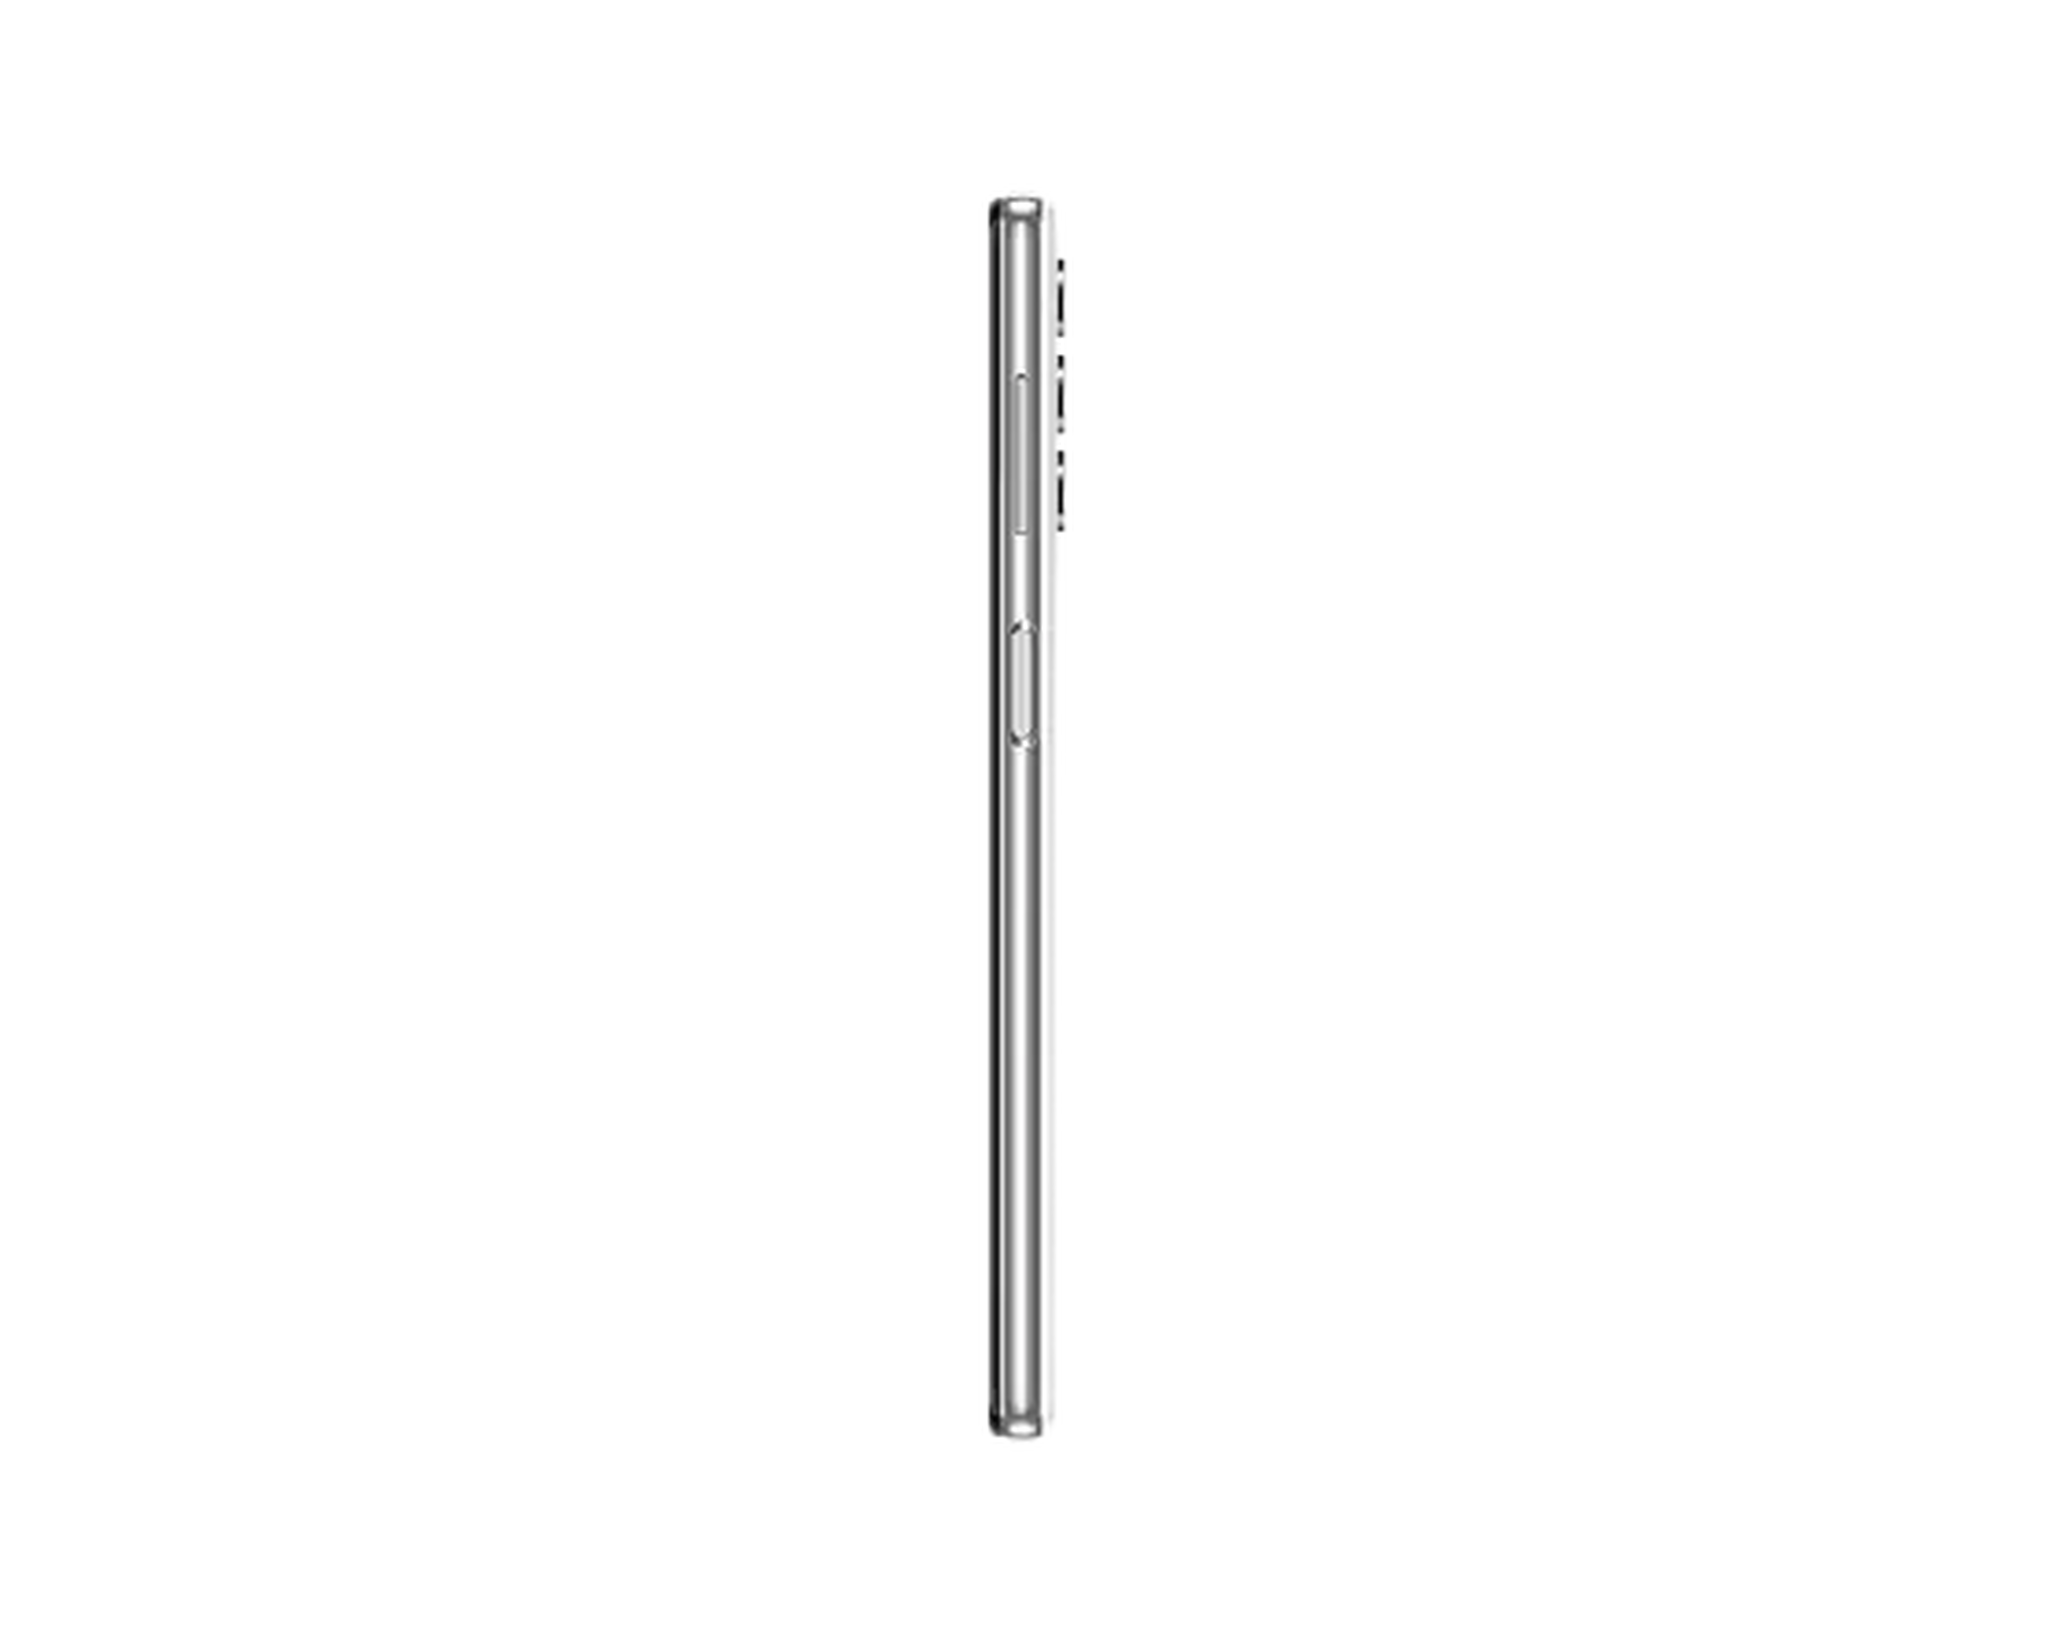 Samsung Galaxy A32 5G 128GB Phone - Awesome White